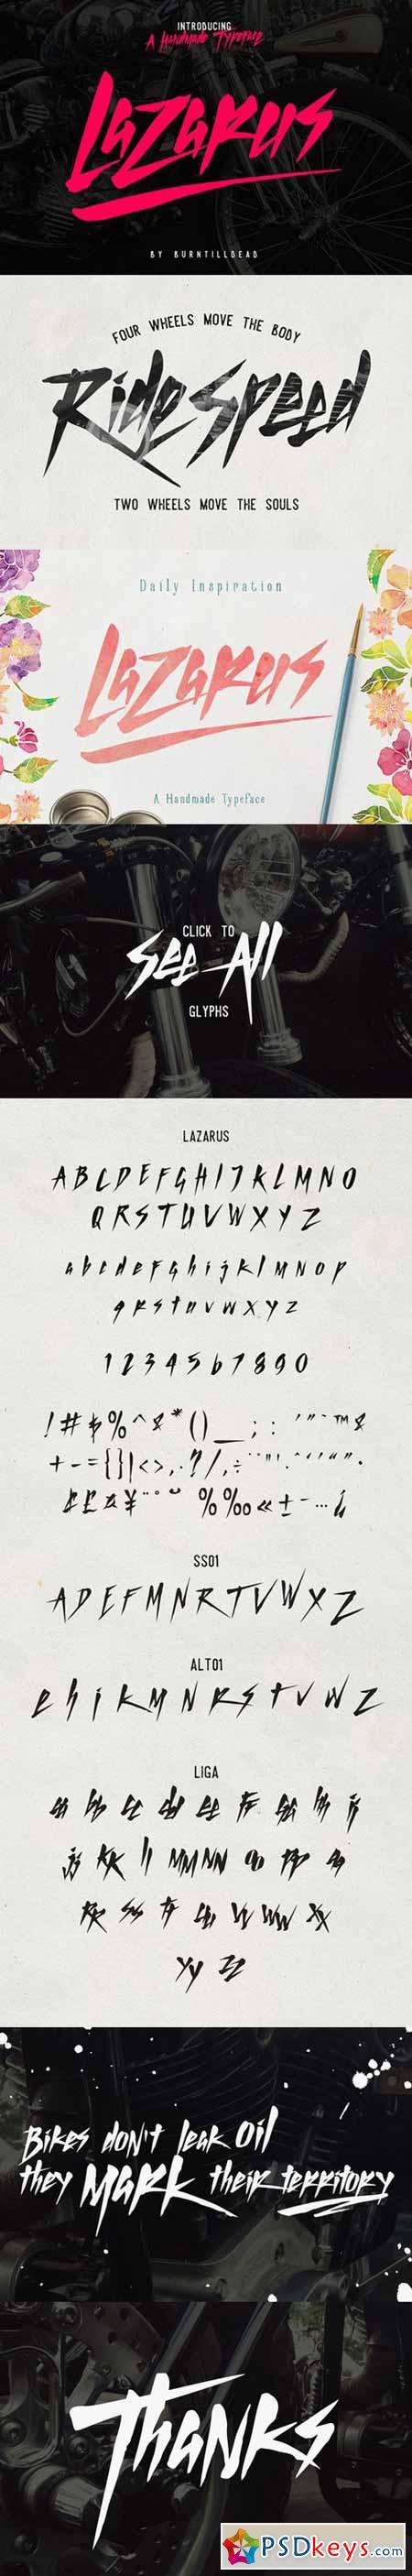 Lazarus Script Font 523631